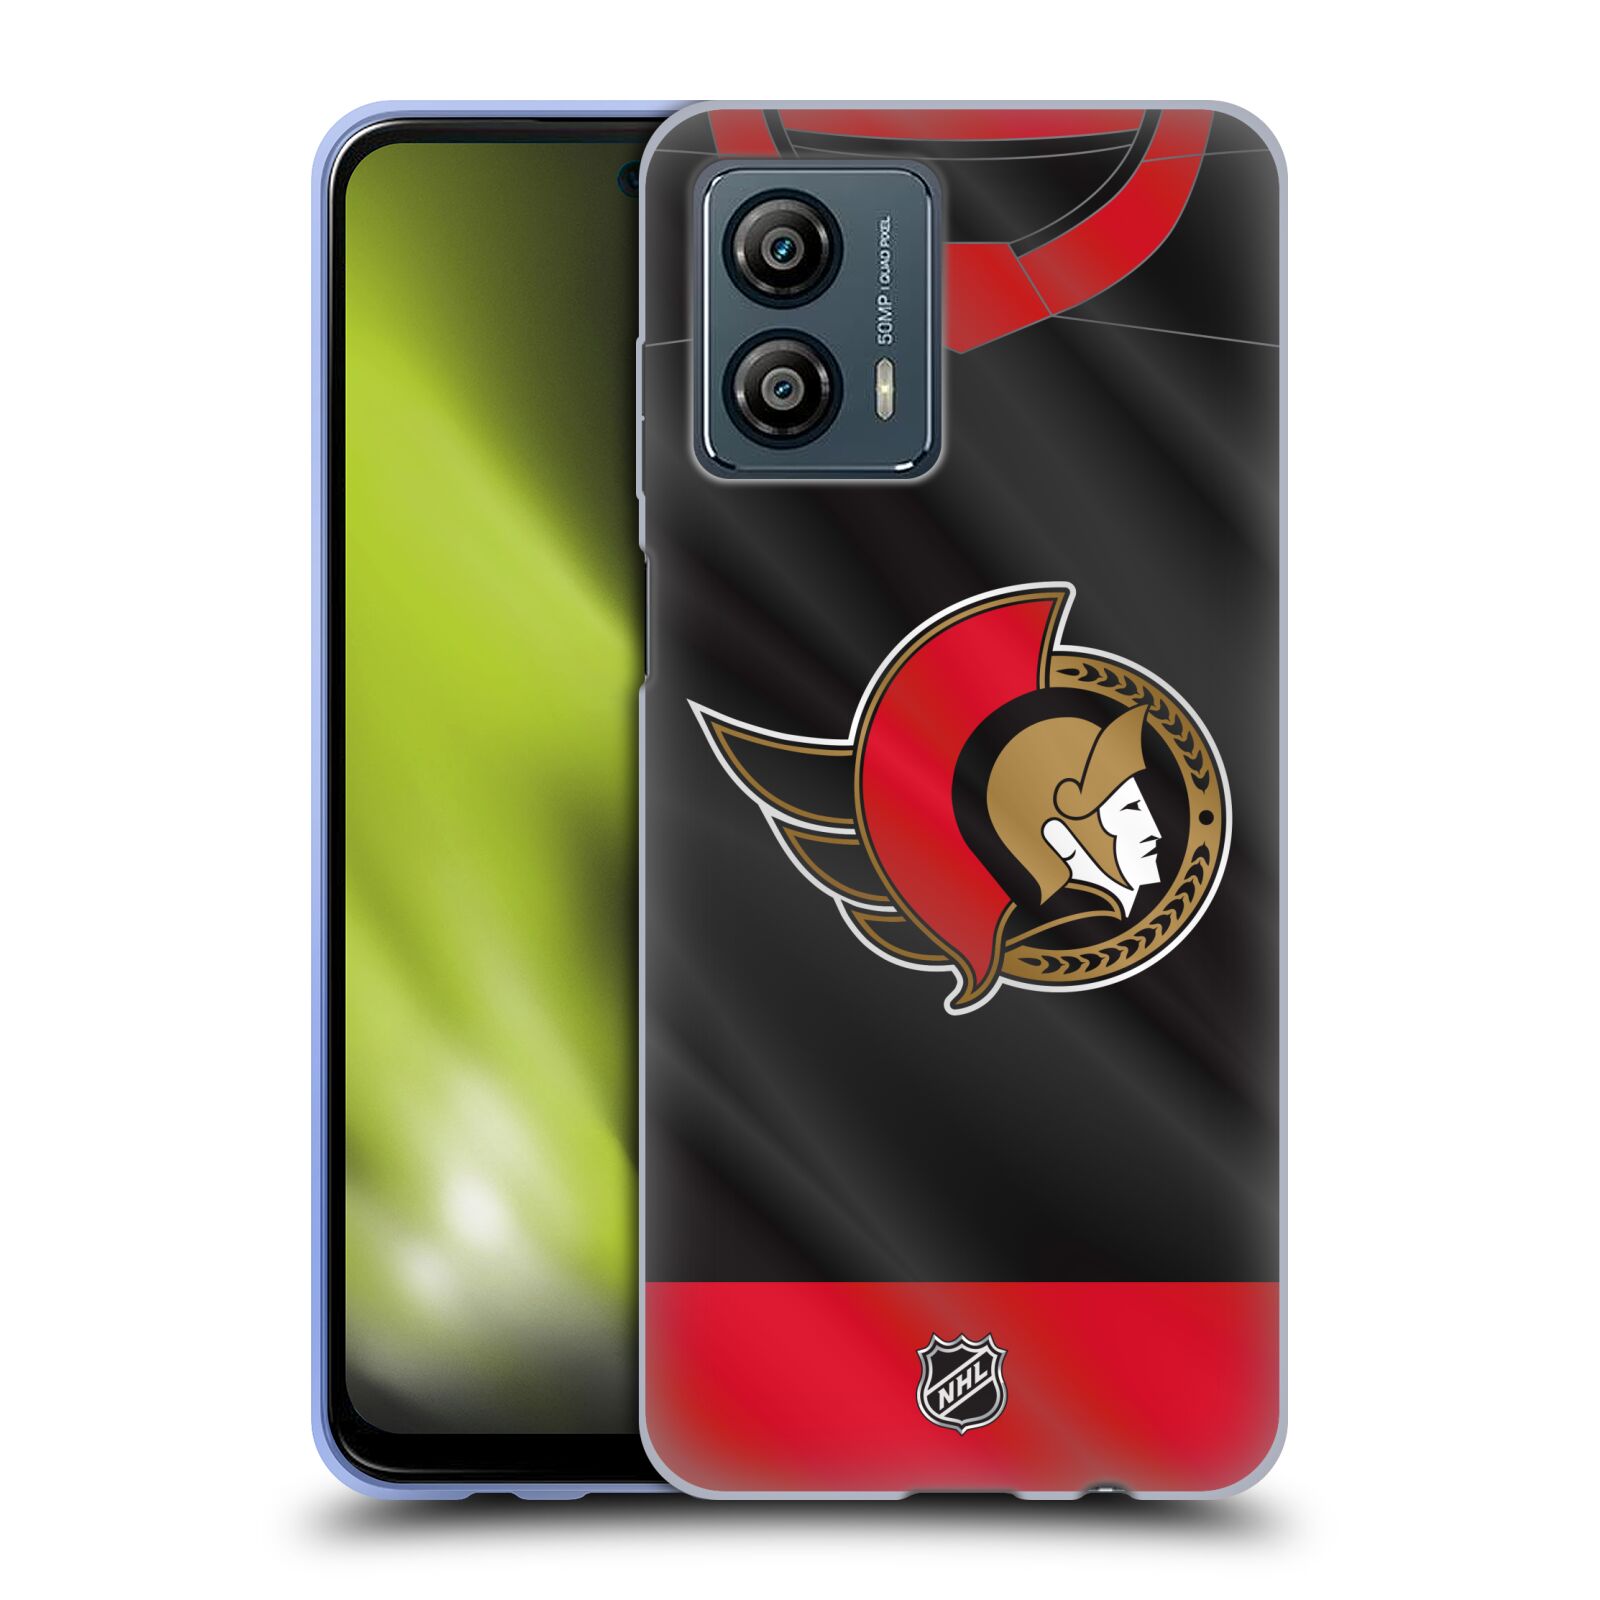 Silikonové pouzdro na mobil Motorola Moto G53 5G - NHL - Dres Ottawa Senators (Silikonový kryt, obal, pouzdro na mobilní telefon Motorola Moto G53 5G s licencovaným motivem NHL - Dres Ottawa Senators)